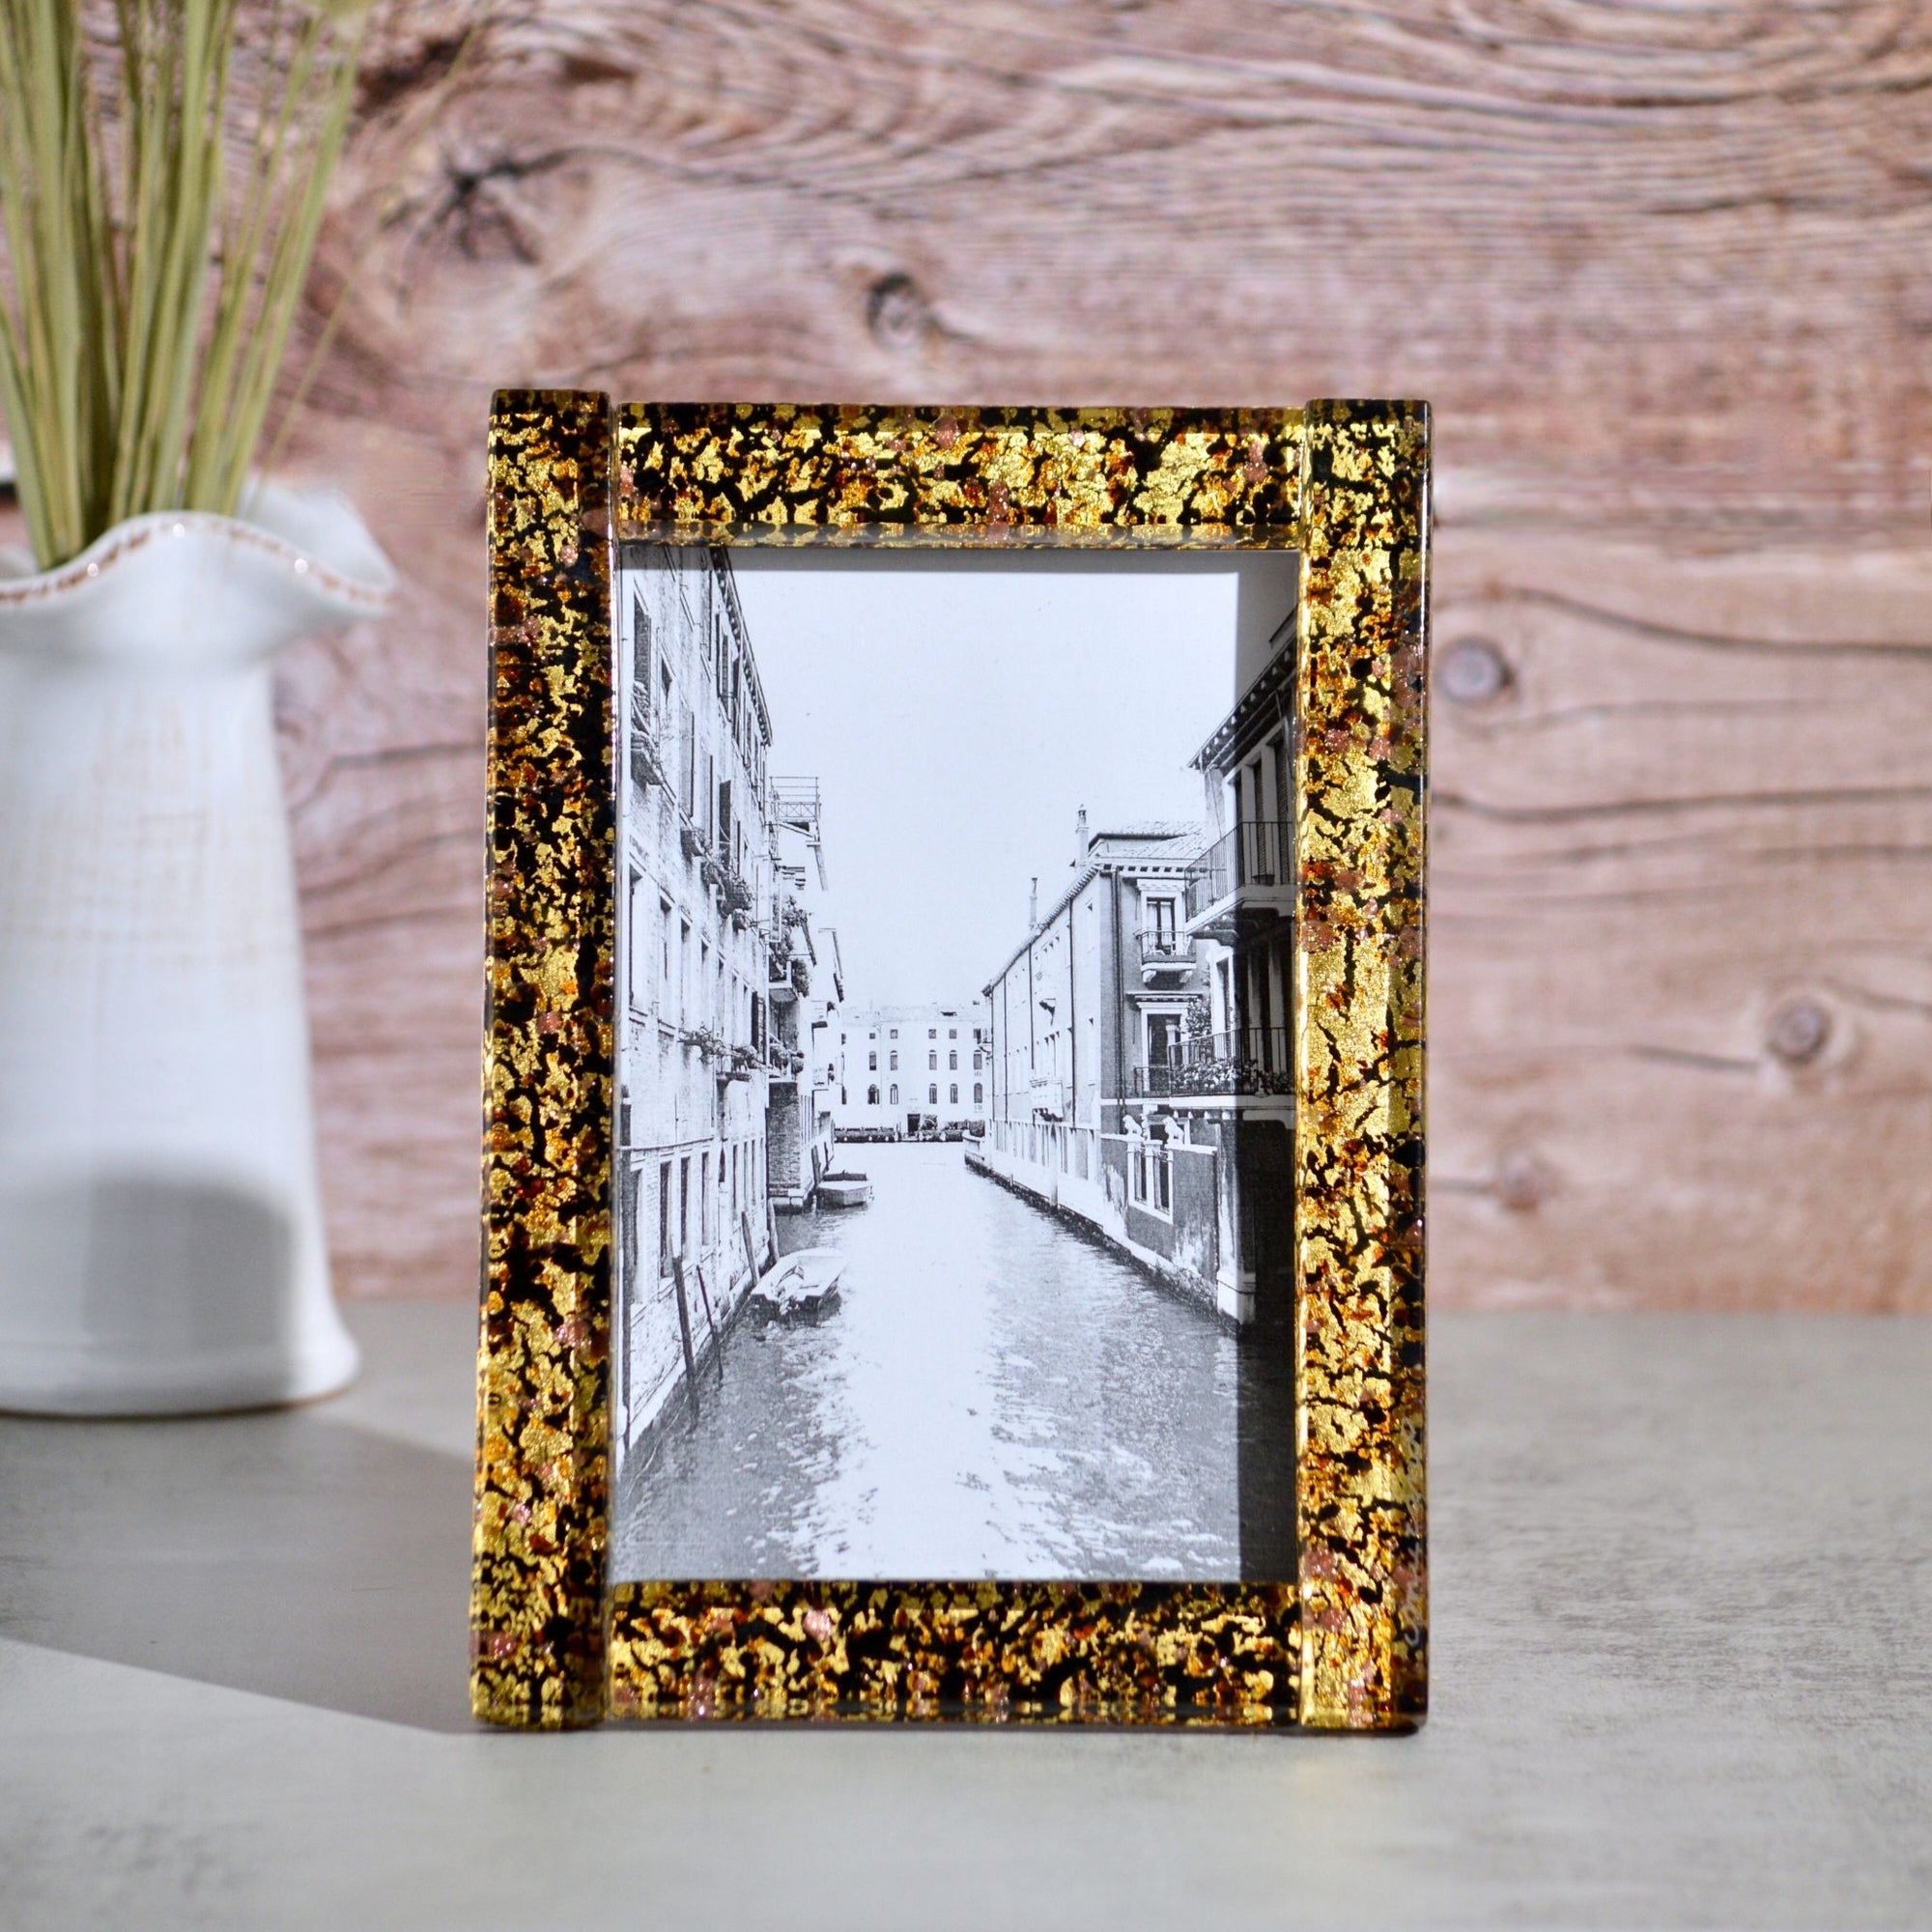 Black & Gold Murano Glass 5" x 7" Photo Frame, Made in Italy - My Italian Decor